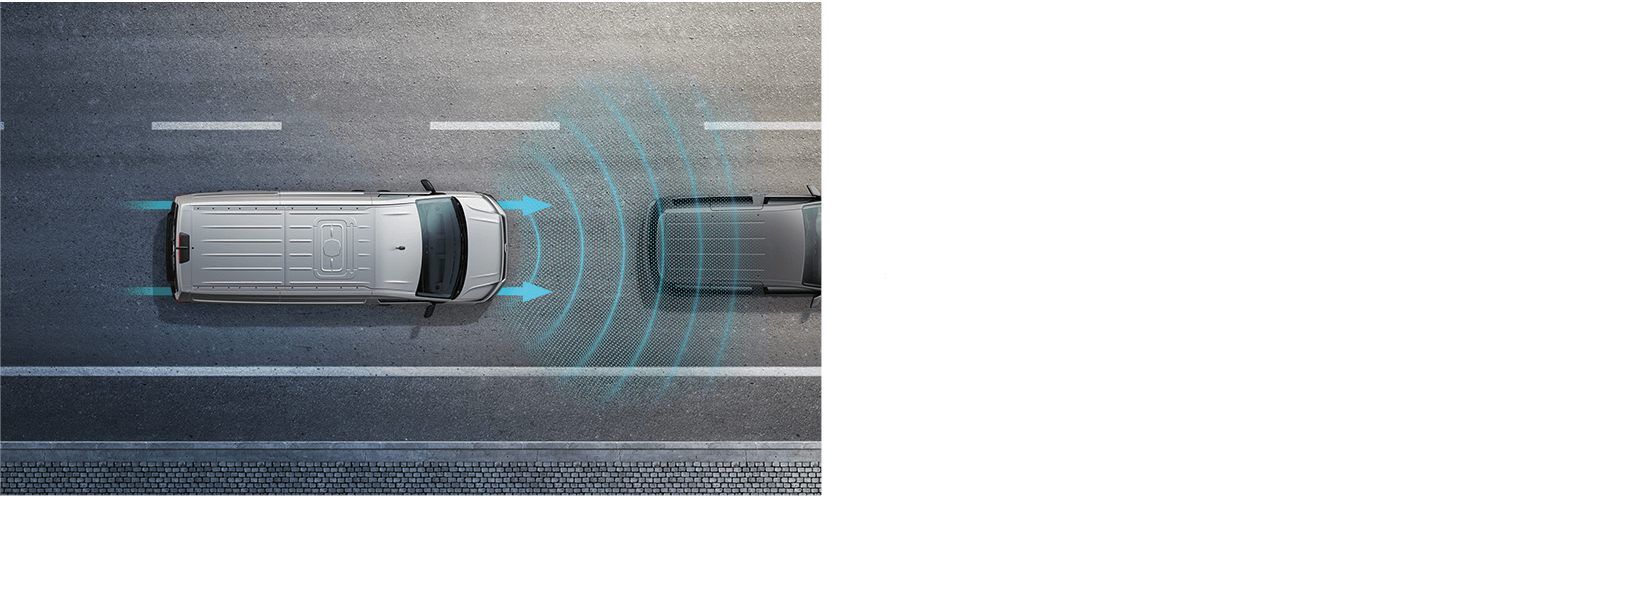 ACC 主動式車距調節巡航系統＊1＊2
          透過前保桿的雷達板，系統將偵測前方車輛來自動調整速度及距離。駕駛可透過方向盤功能鍵，即可輕鬆設定前車車距、定速、速限等功能。塞車時，系統會煞停然後根據情況在 3 秒鐘內重新起步，新增STOP & GO的功能。在長途駕駛中，有效降低駕駛的疲勞感，提升行車安全及舒適性。
（199全車型標配）